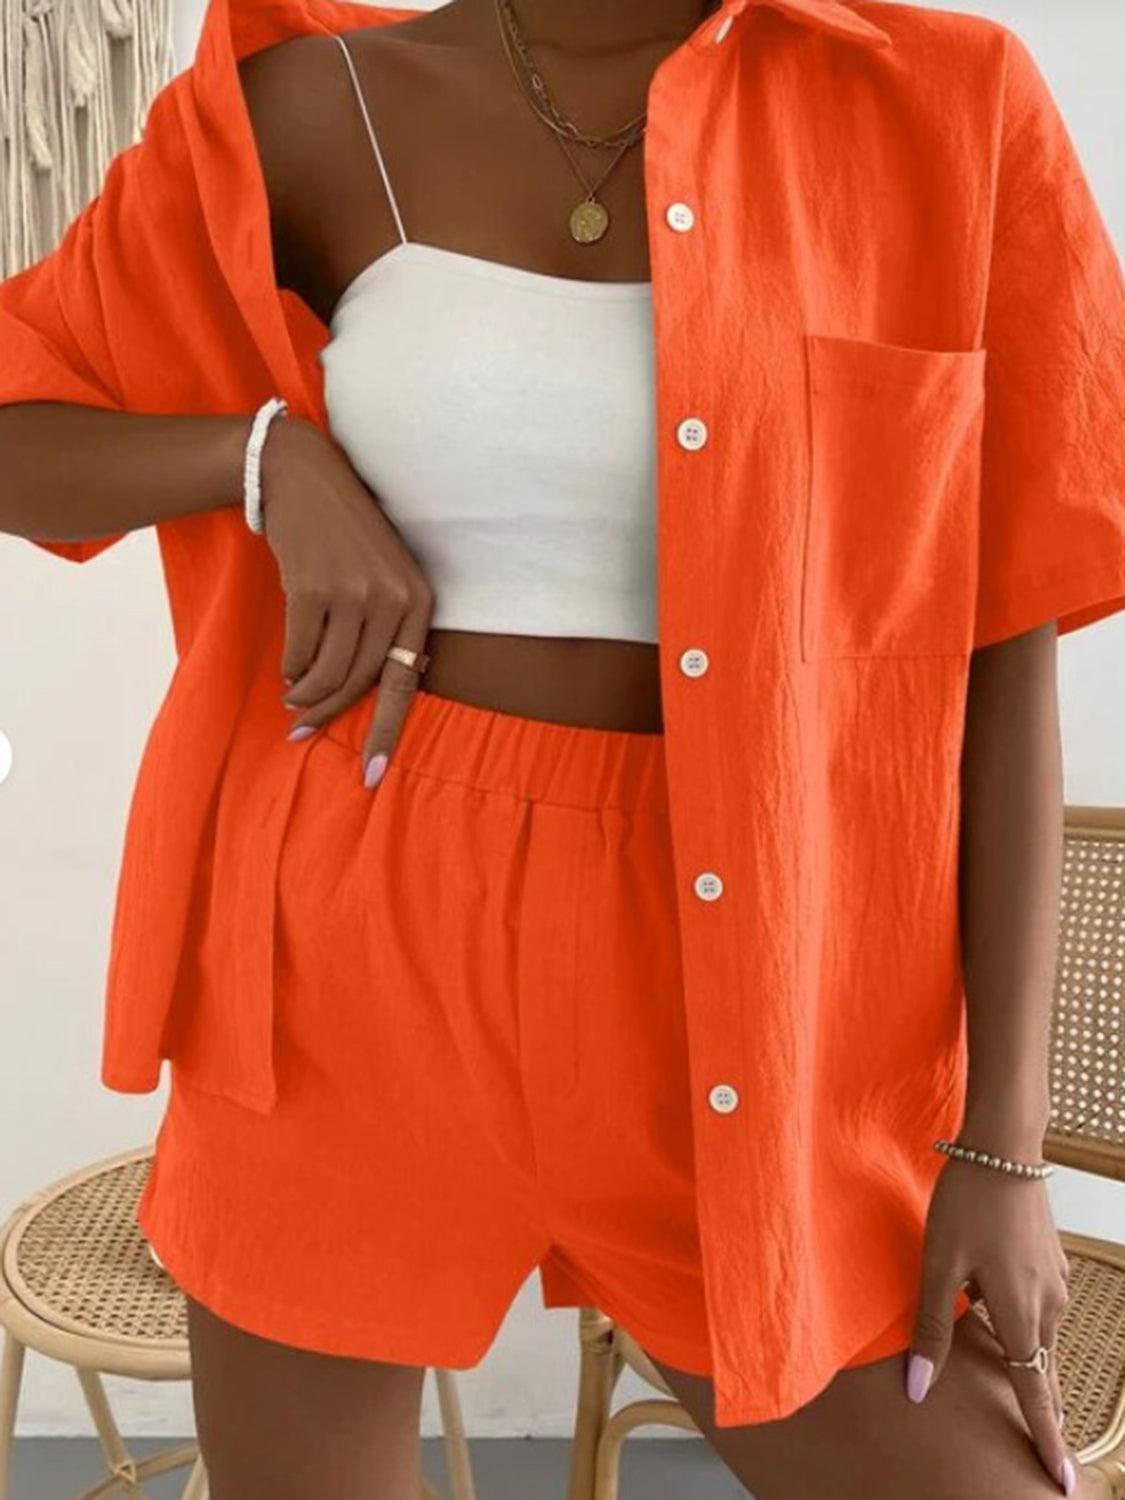 a woman wearing an orange shirt and shorts